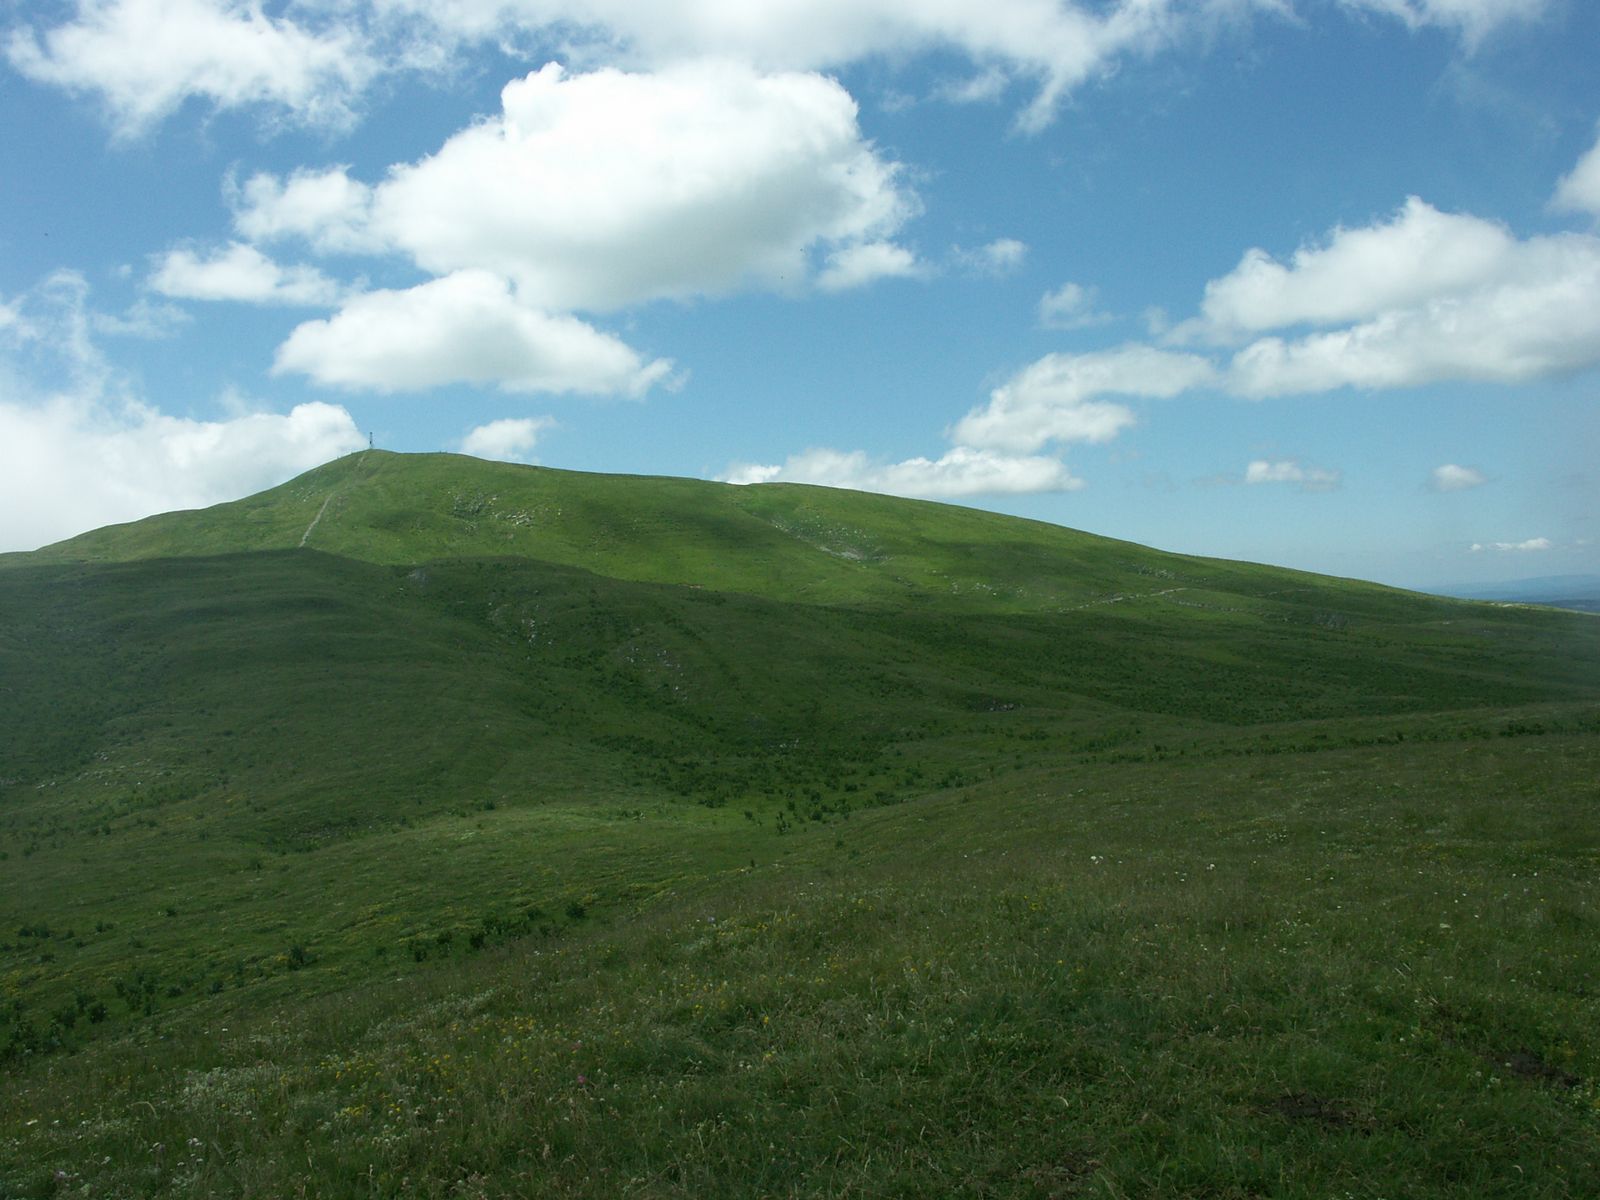 an image of a hillside with green grass